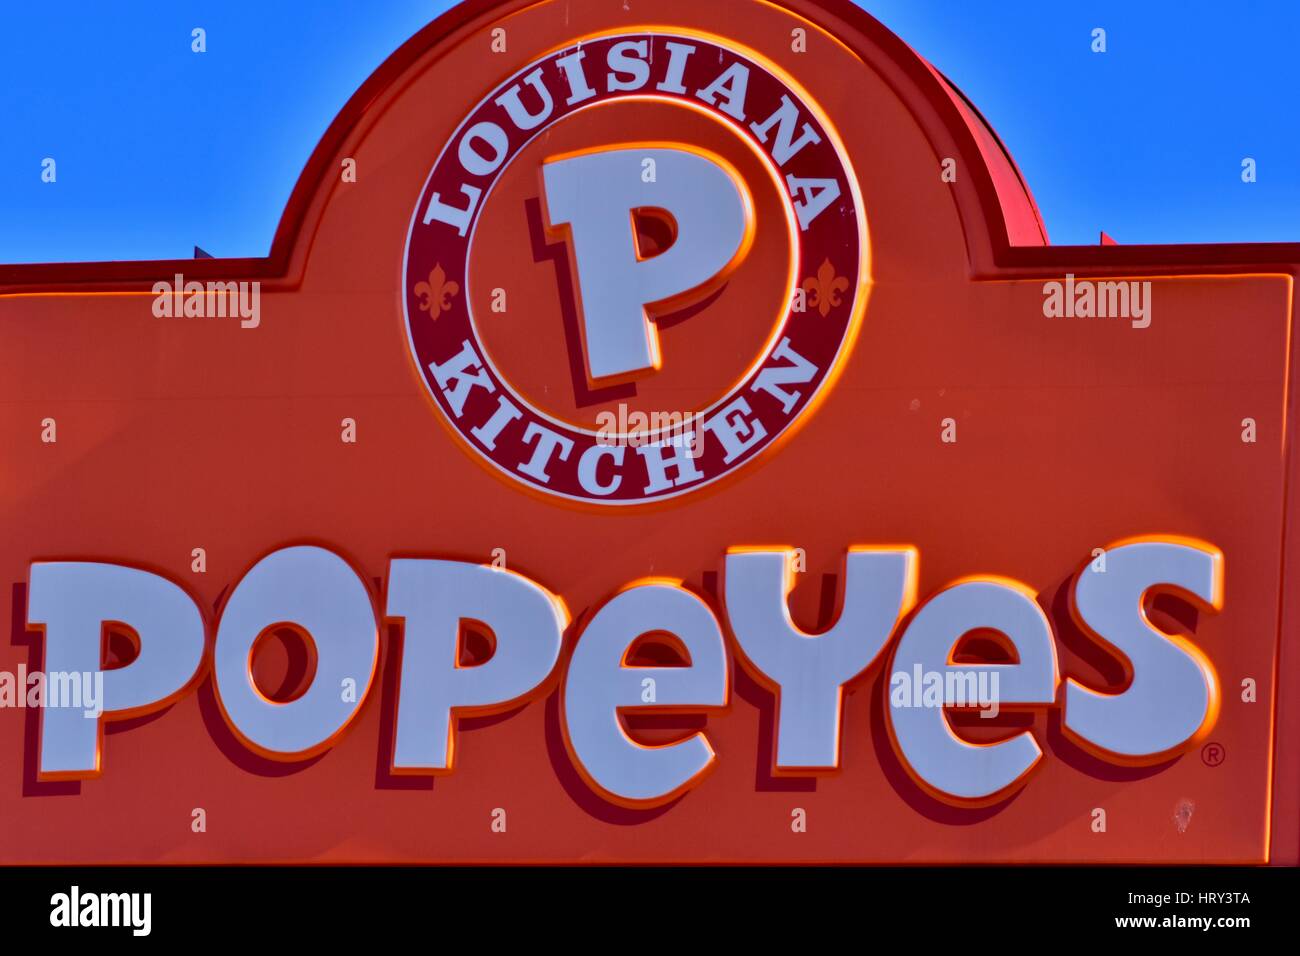 Popeyes Louisiana Kitchen Sign Stock Photo Royalty Free Image